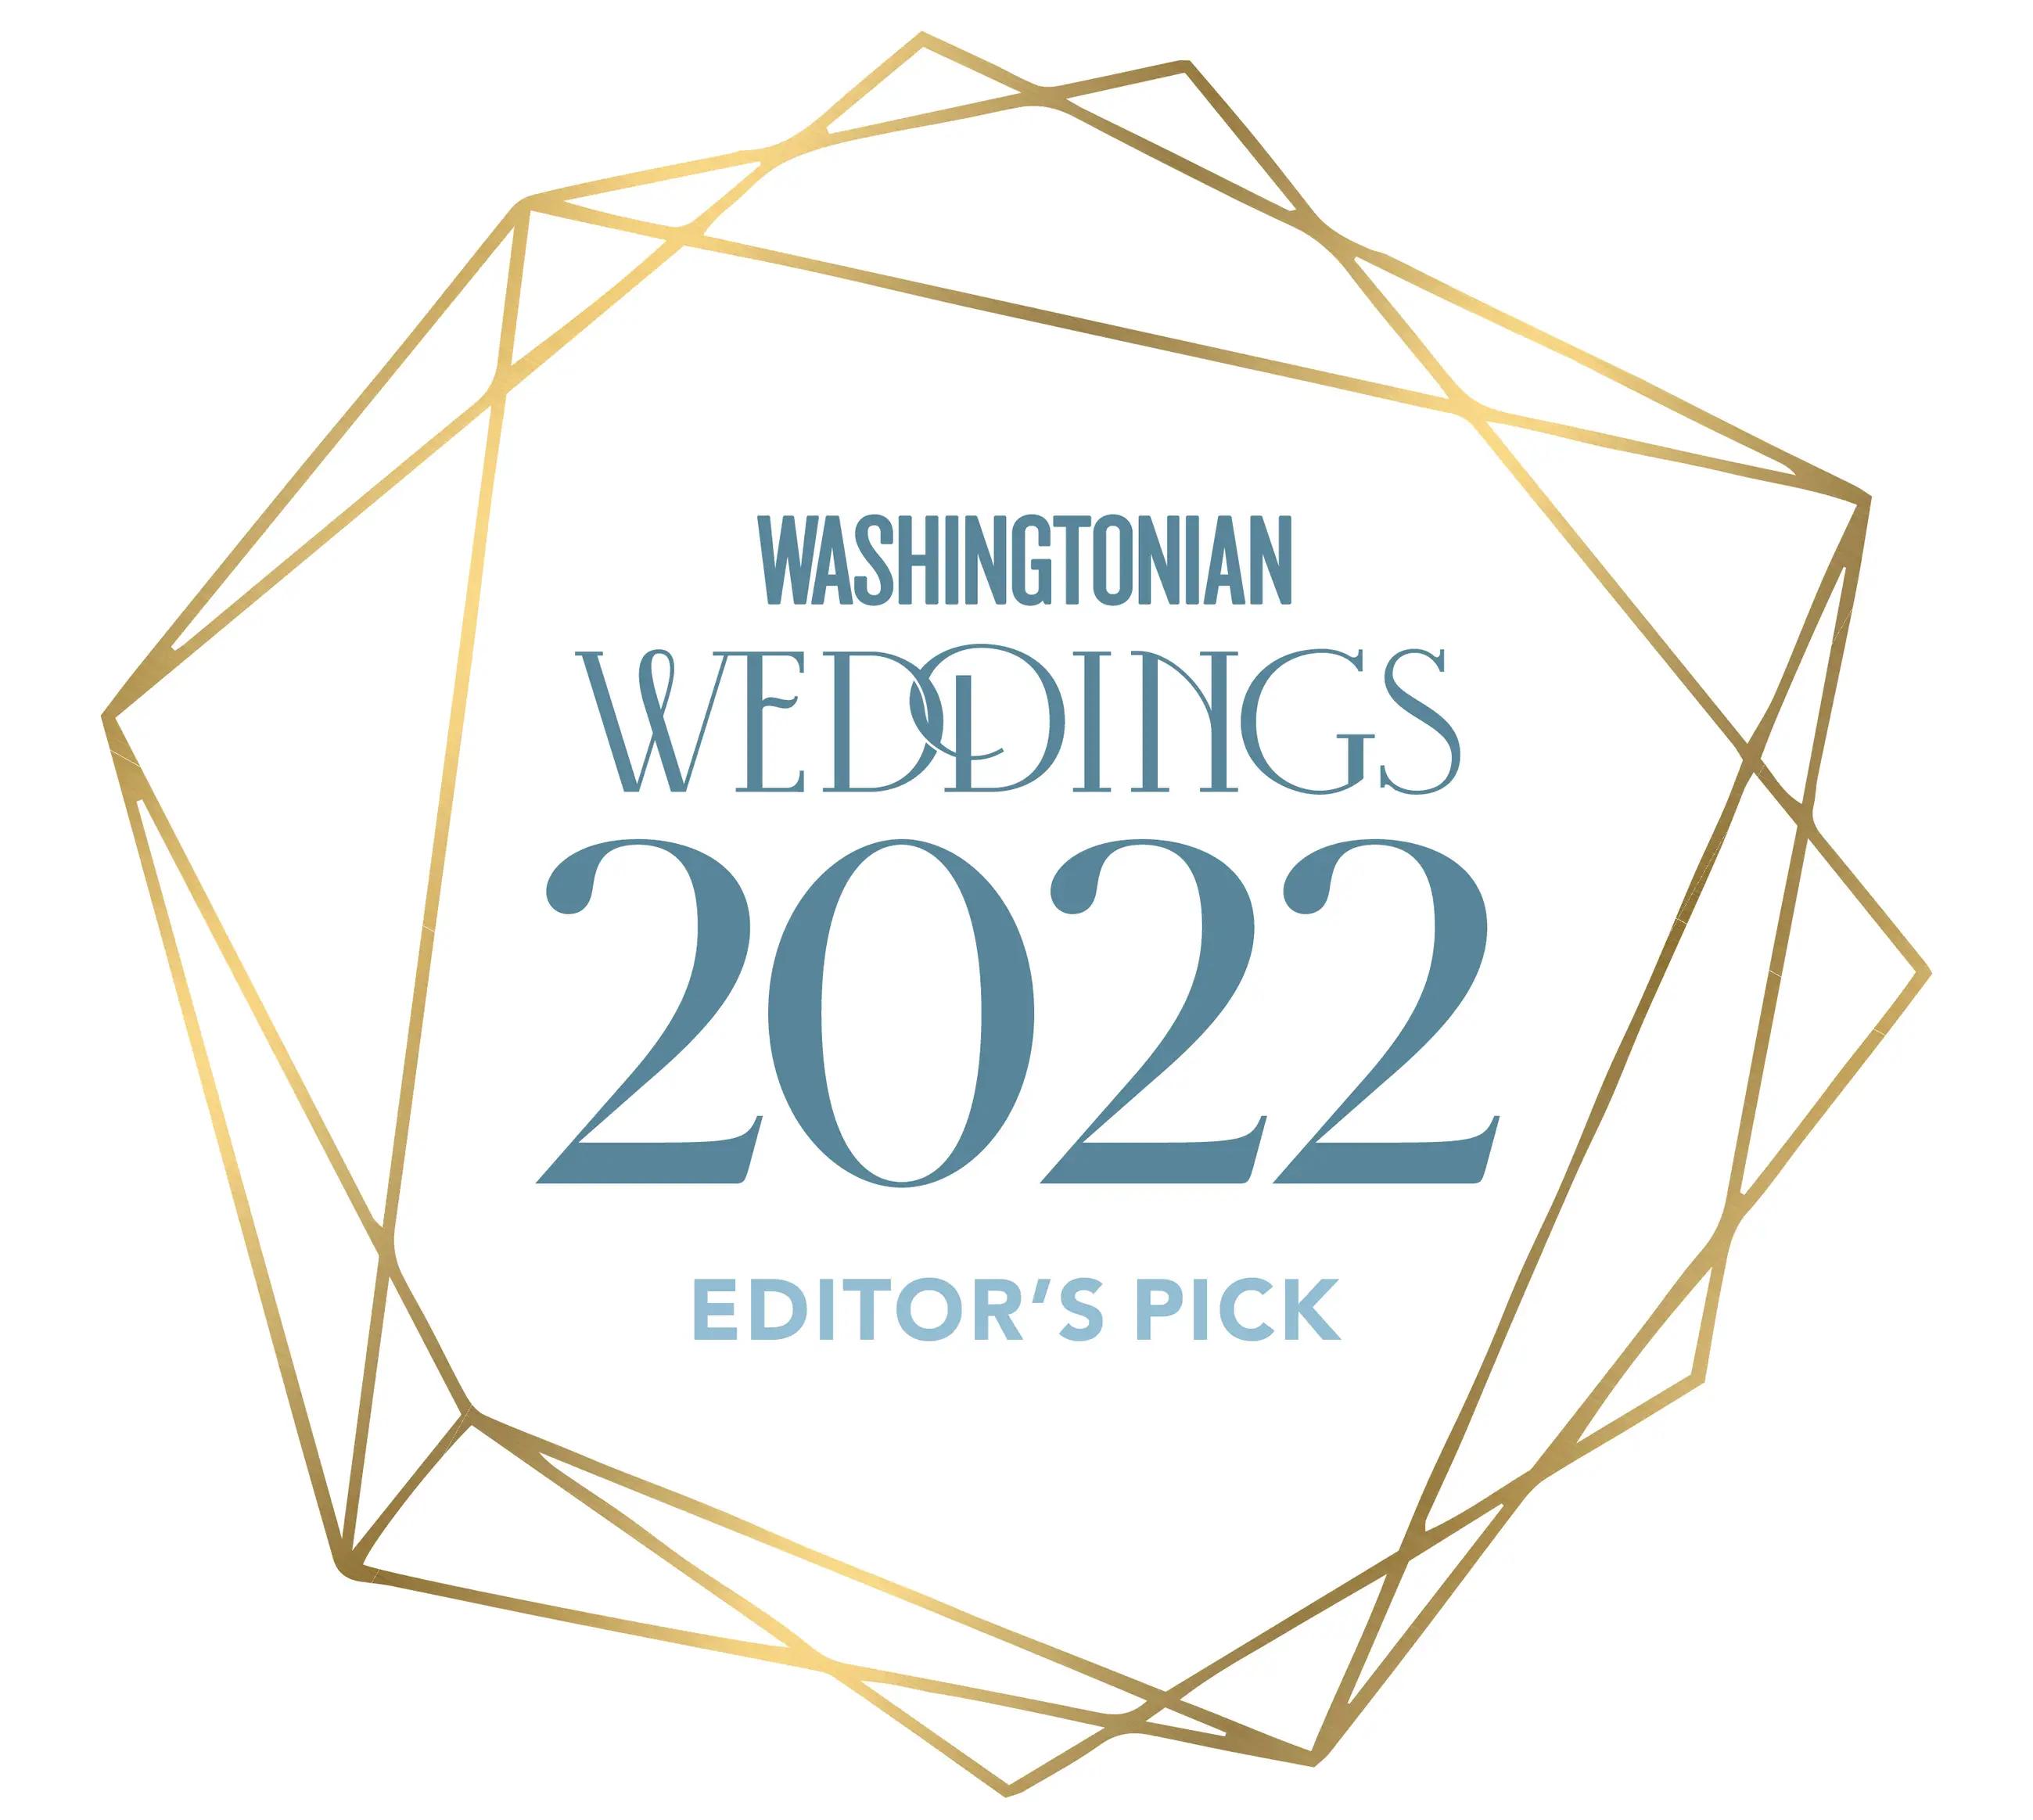 Washingtonian Weddings 2020 Best Wedding Vendor